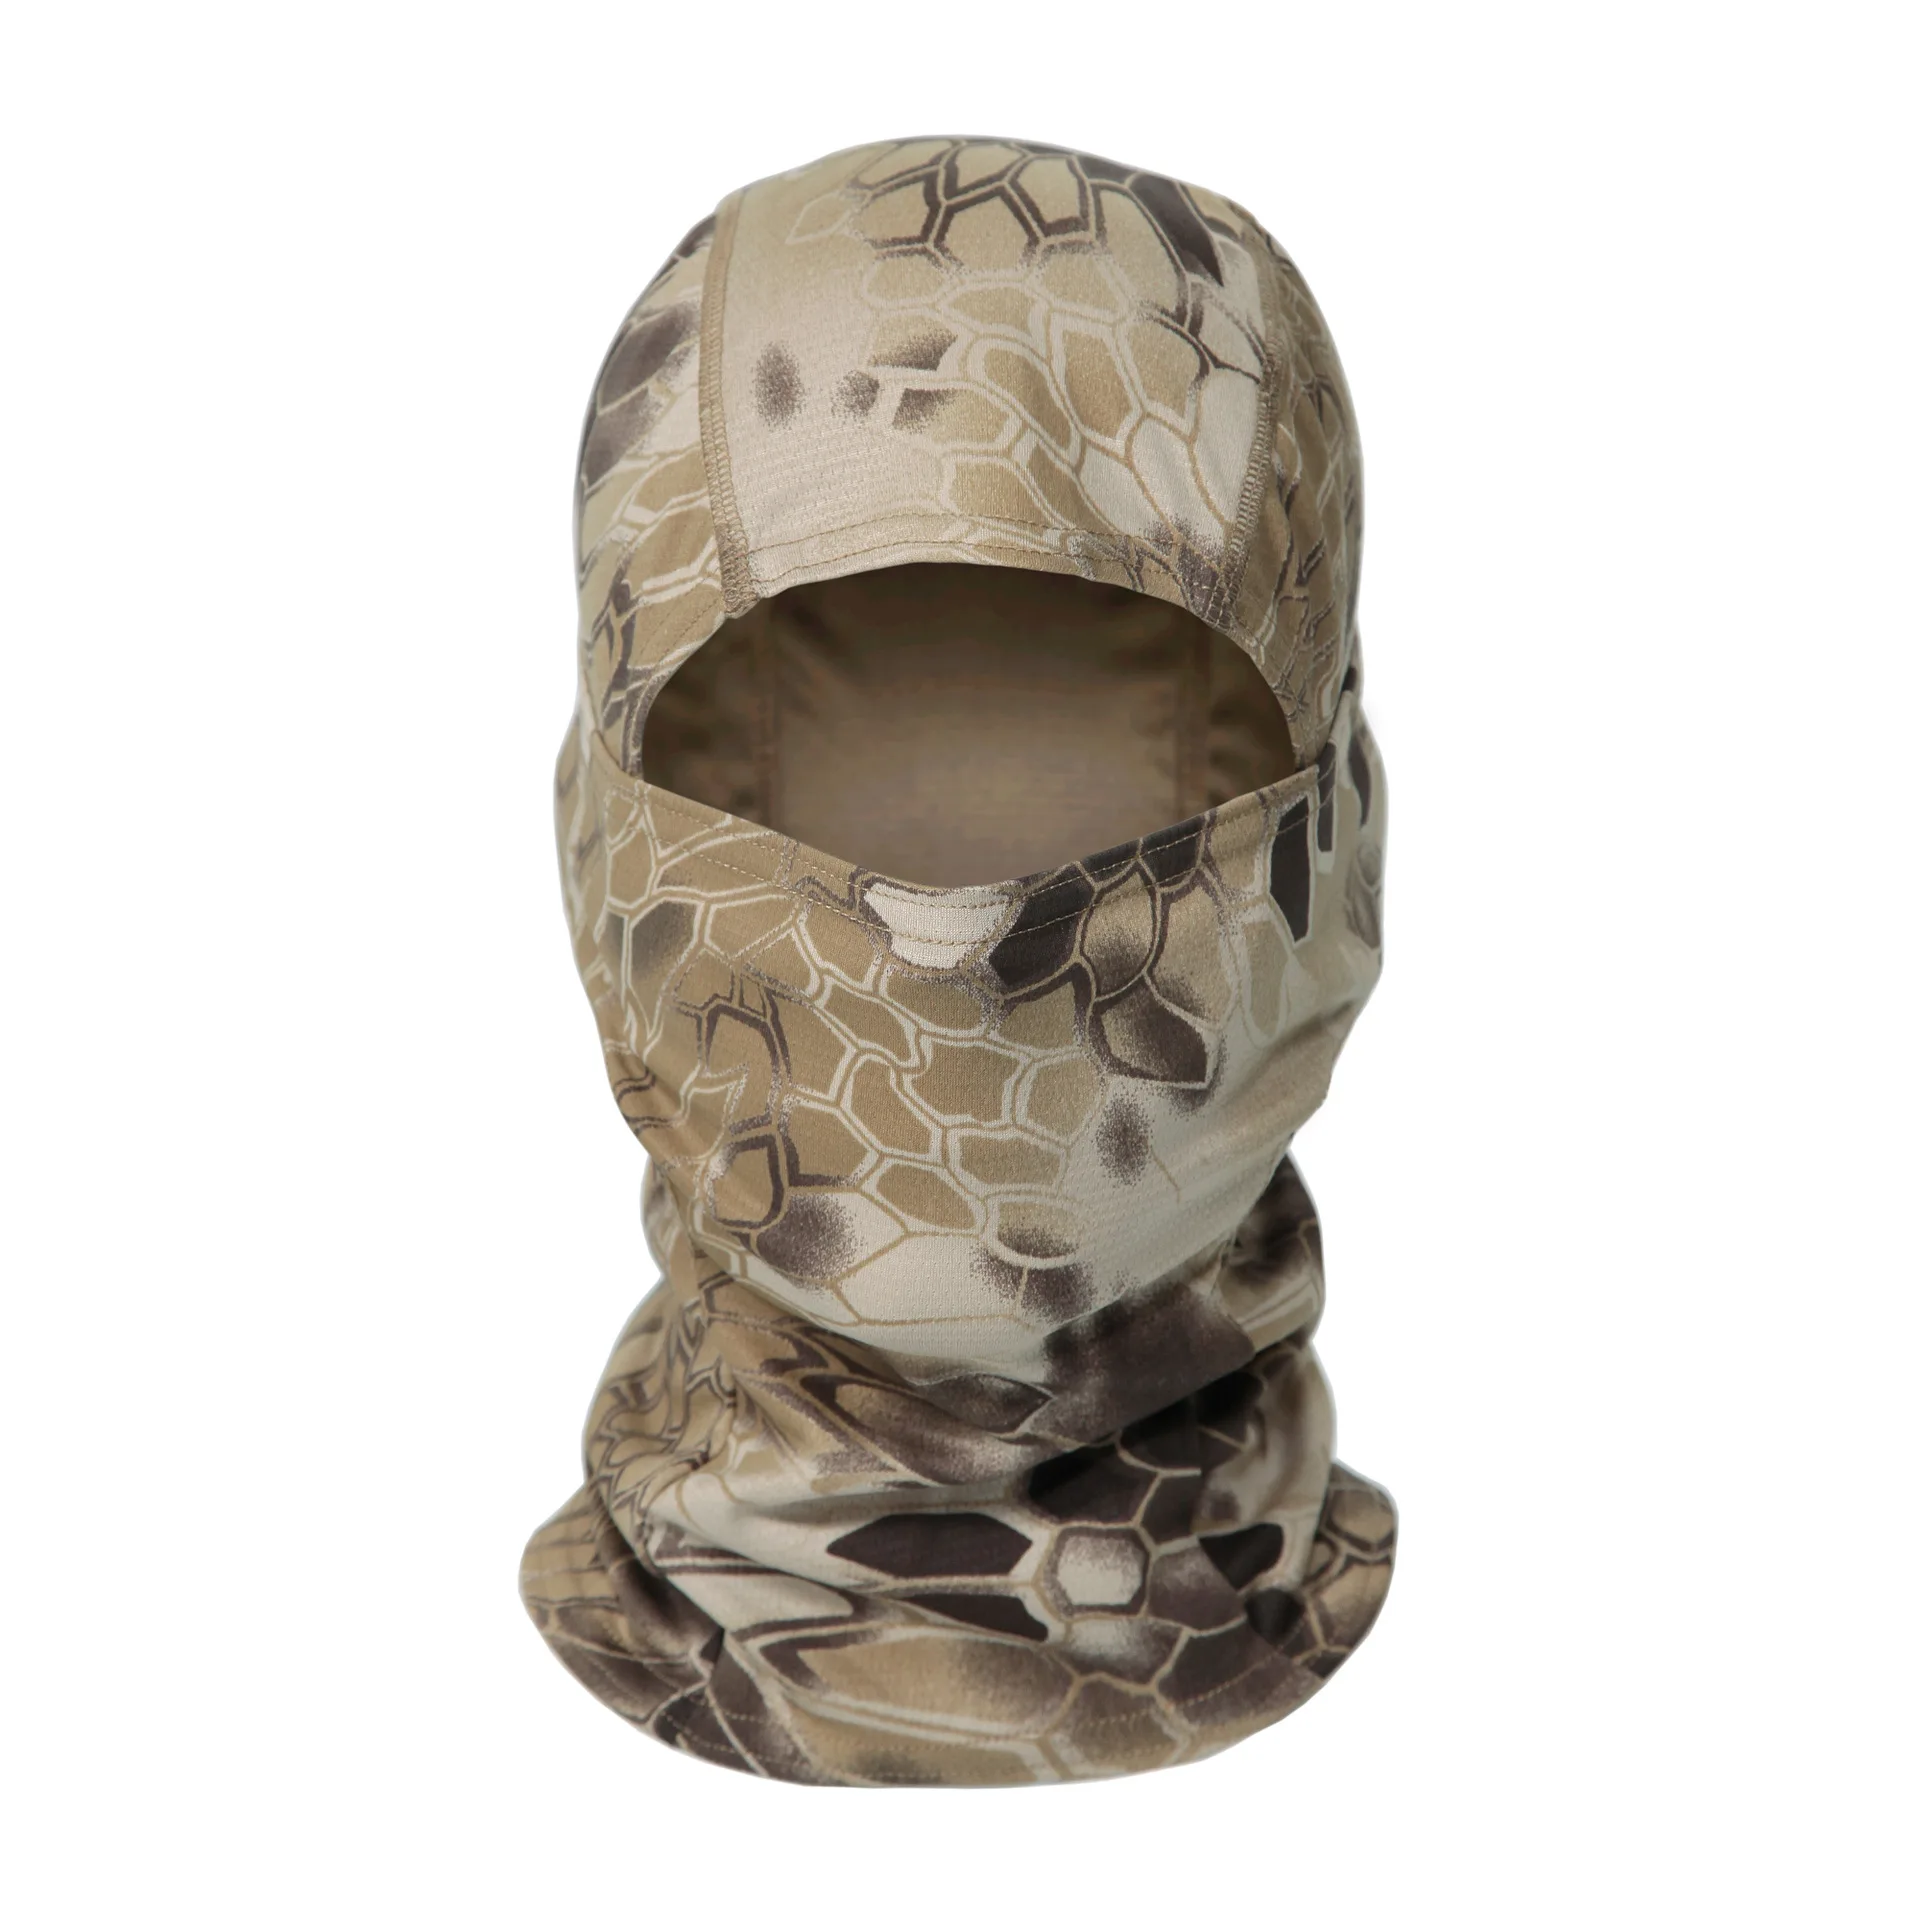 2PCS Camo Balaclava Fishing Full Face Cover Hood Tactical Full Face Mask  for Men